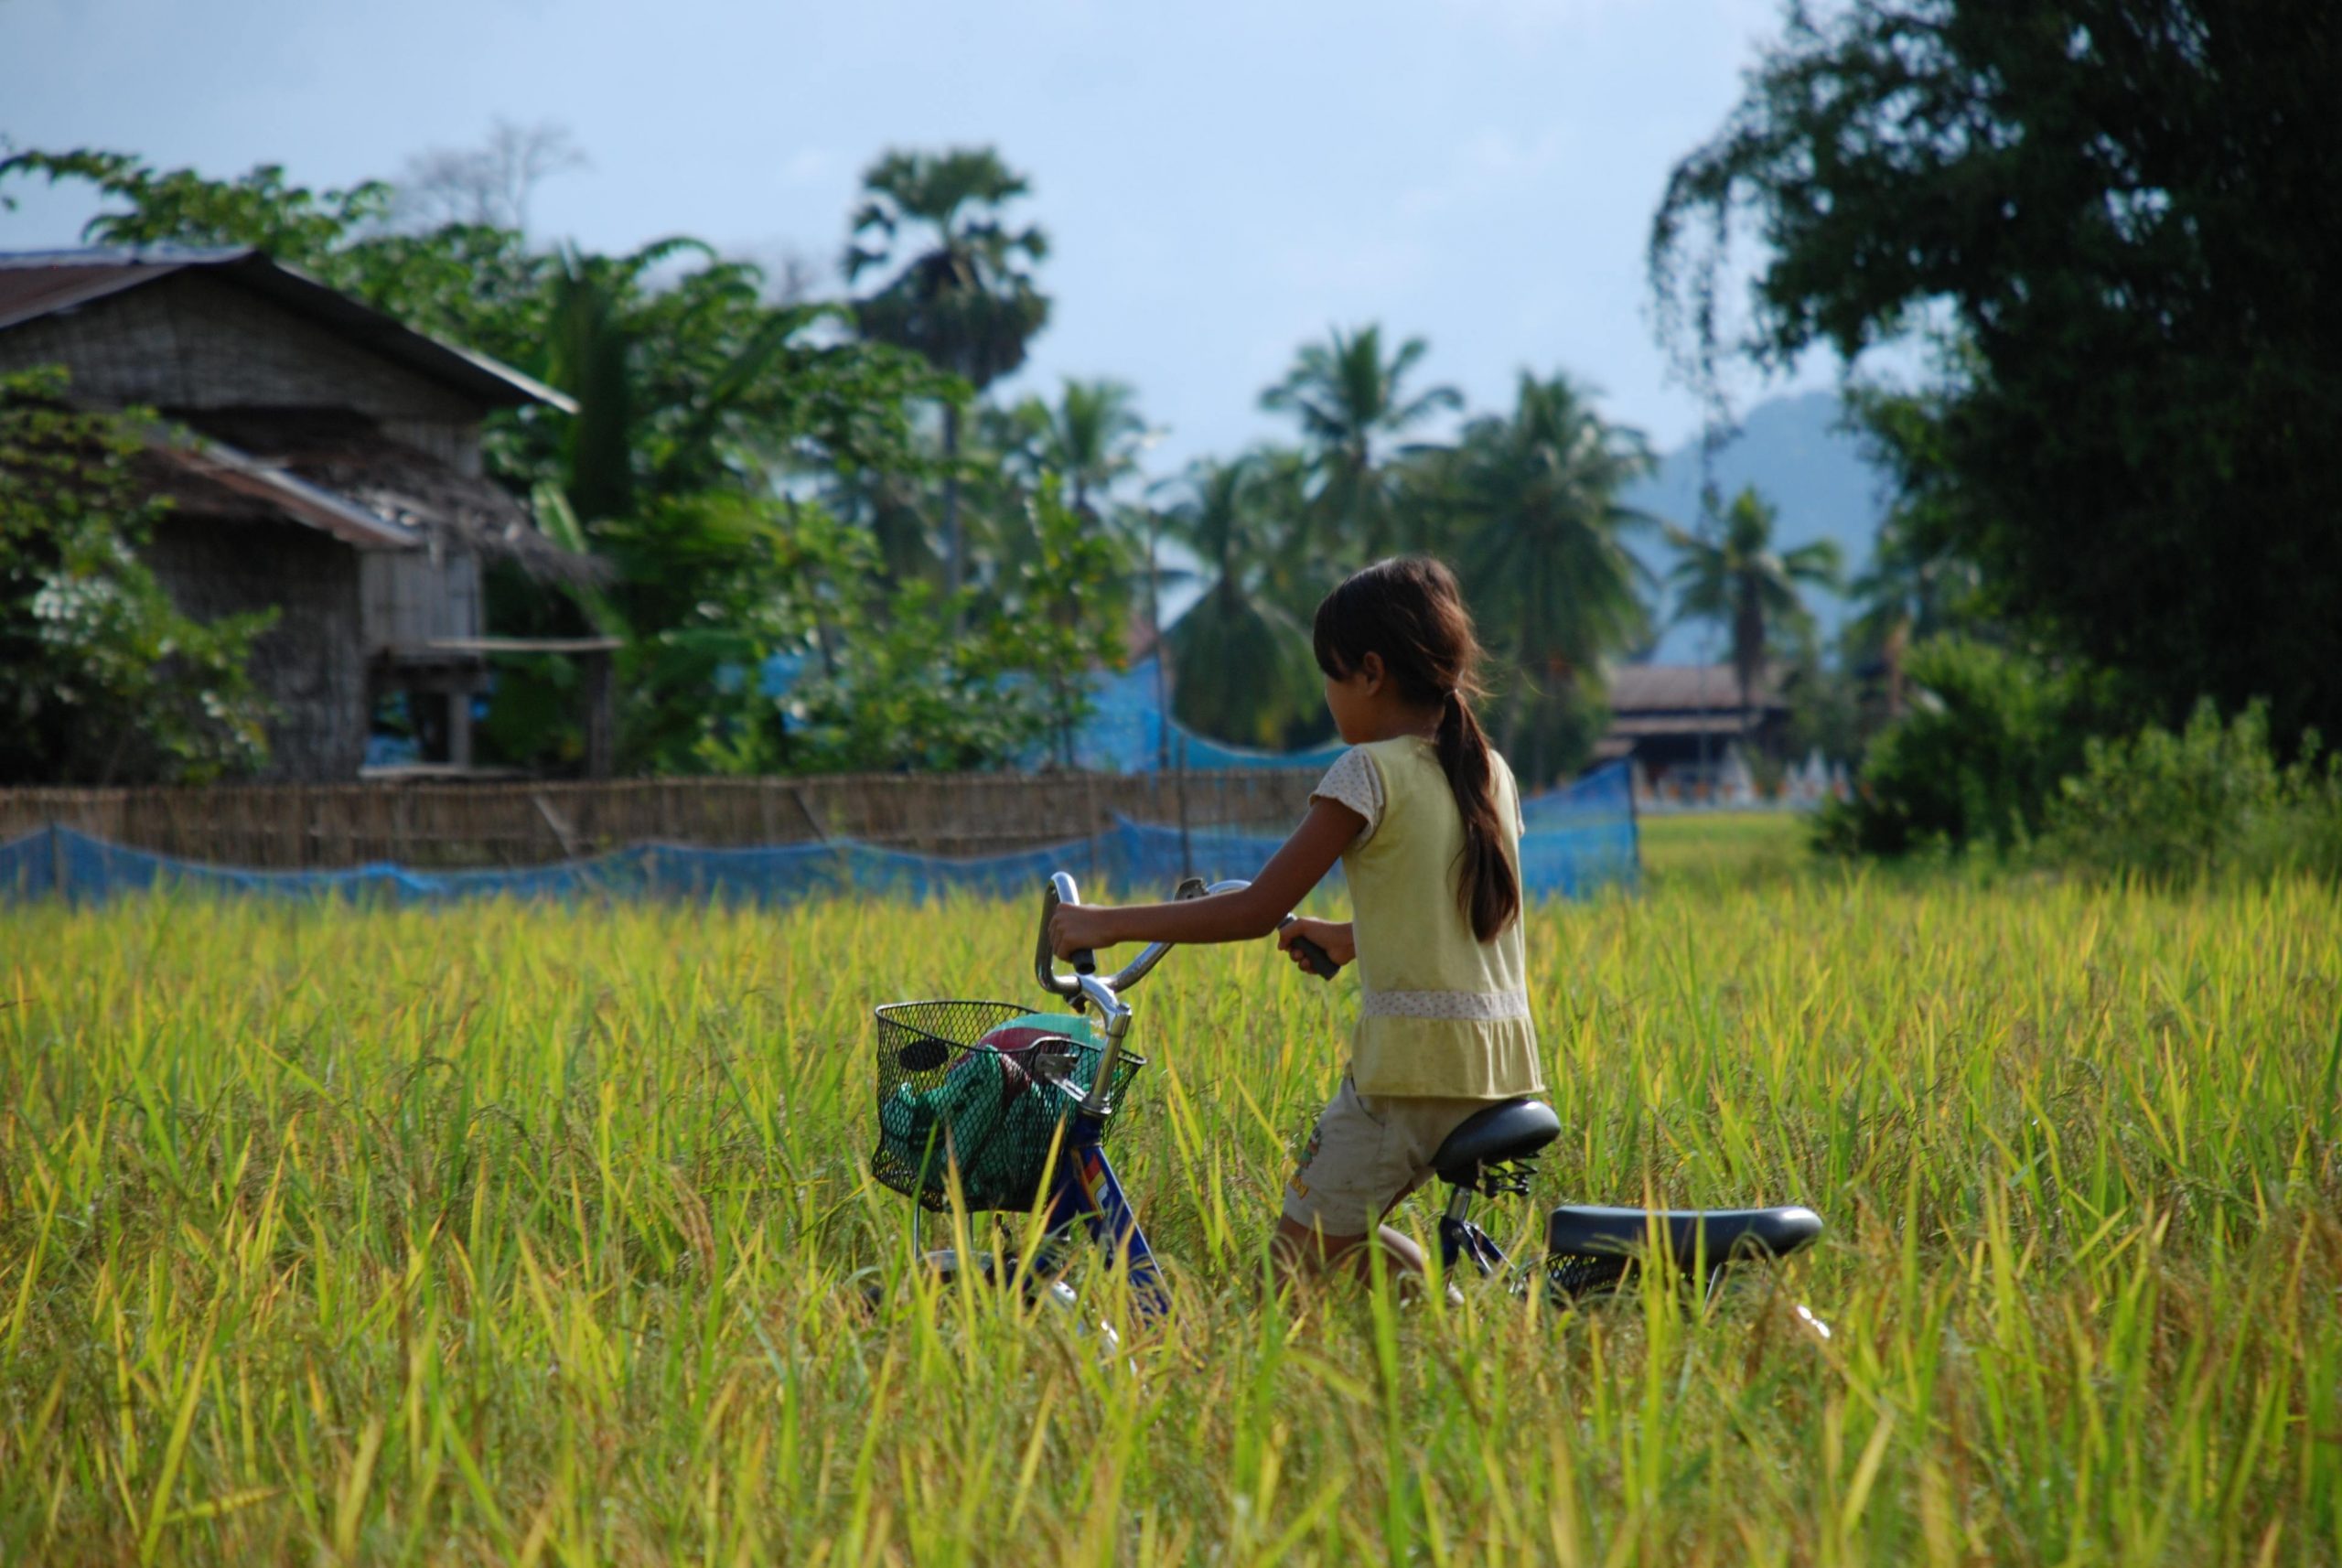 A little girl riding a bike on a field